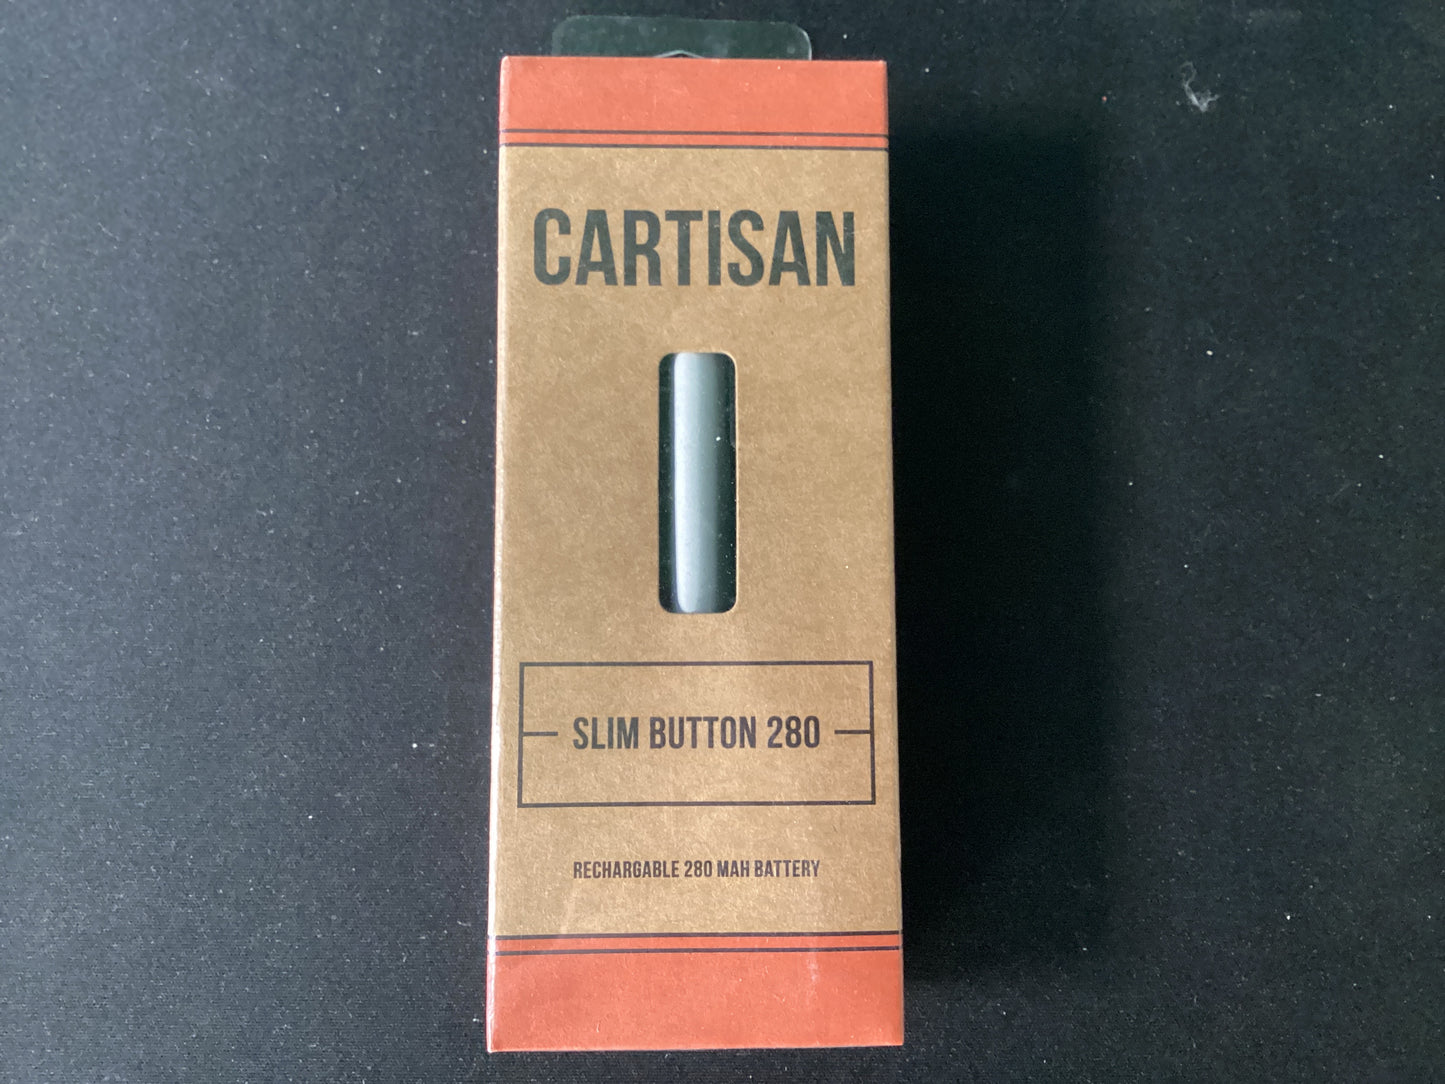 Cartisan 280 Slim Button